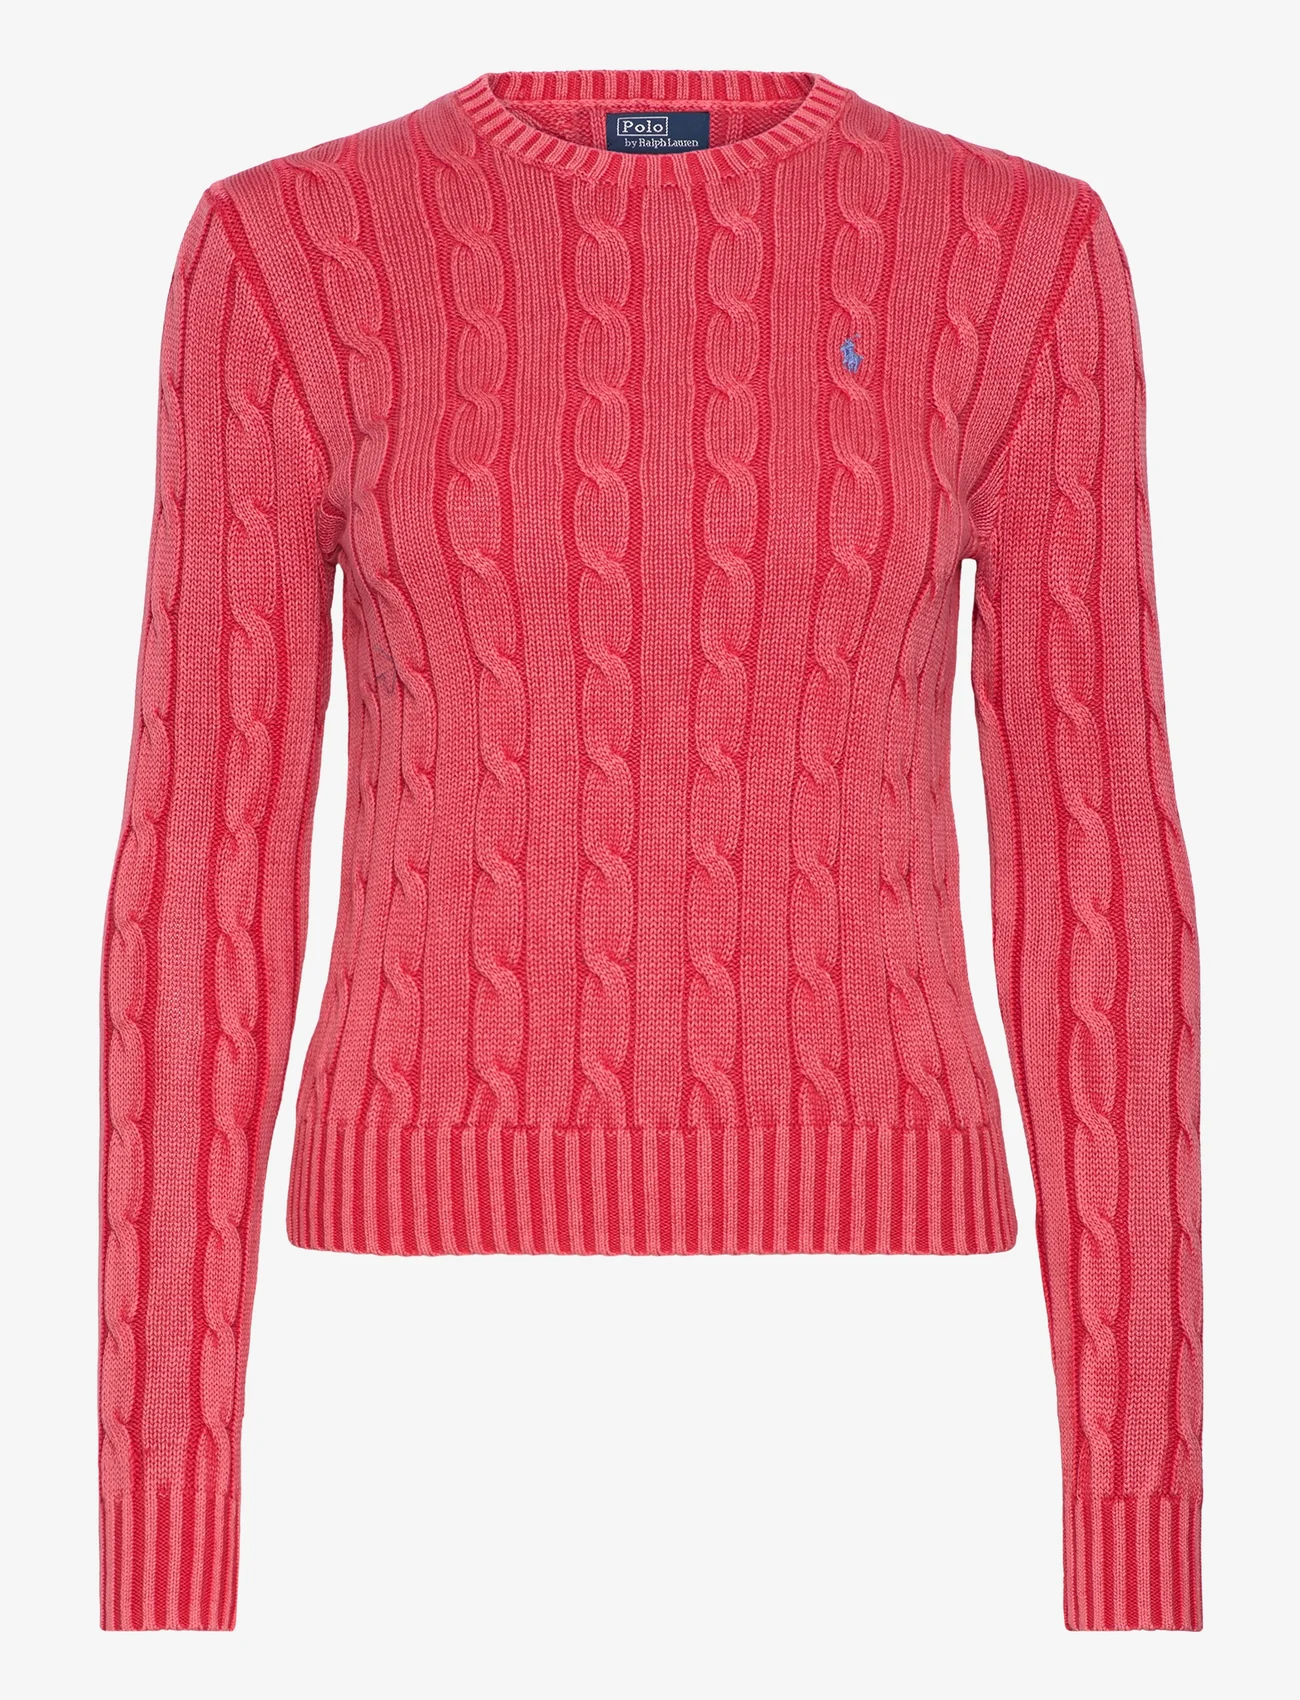 Polo Ralph Lauren - Cable-Knit Cotton Crewneck Sweater - pullover - corallo - 0